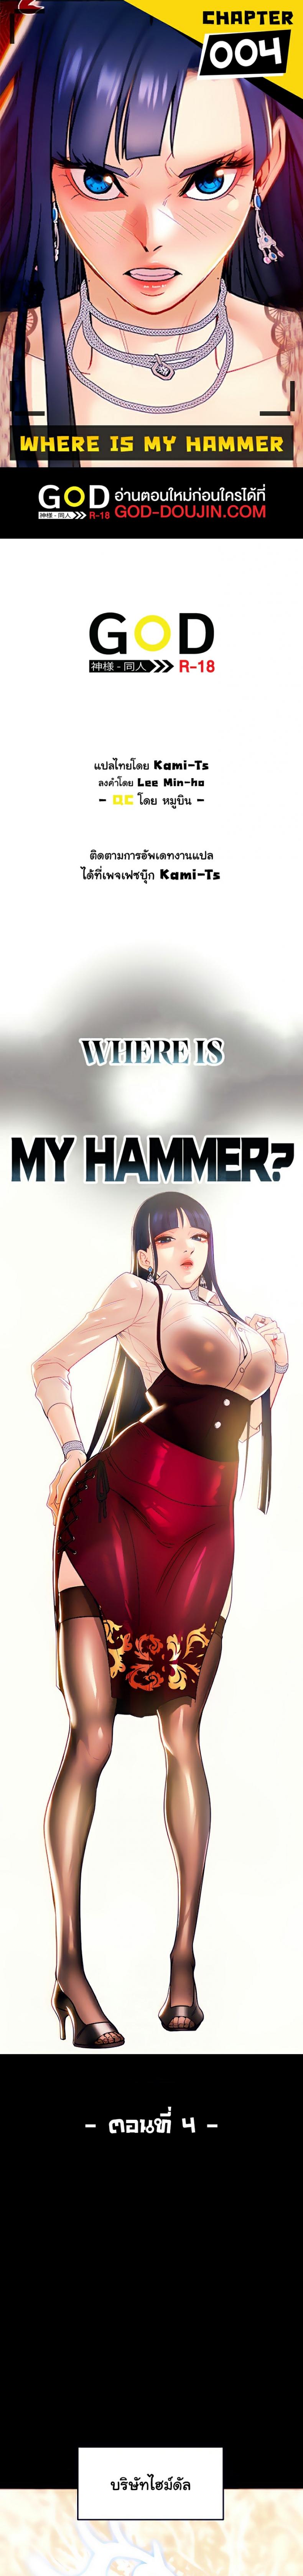 Where Did My Hammer Go01